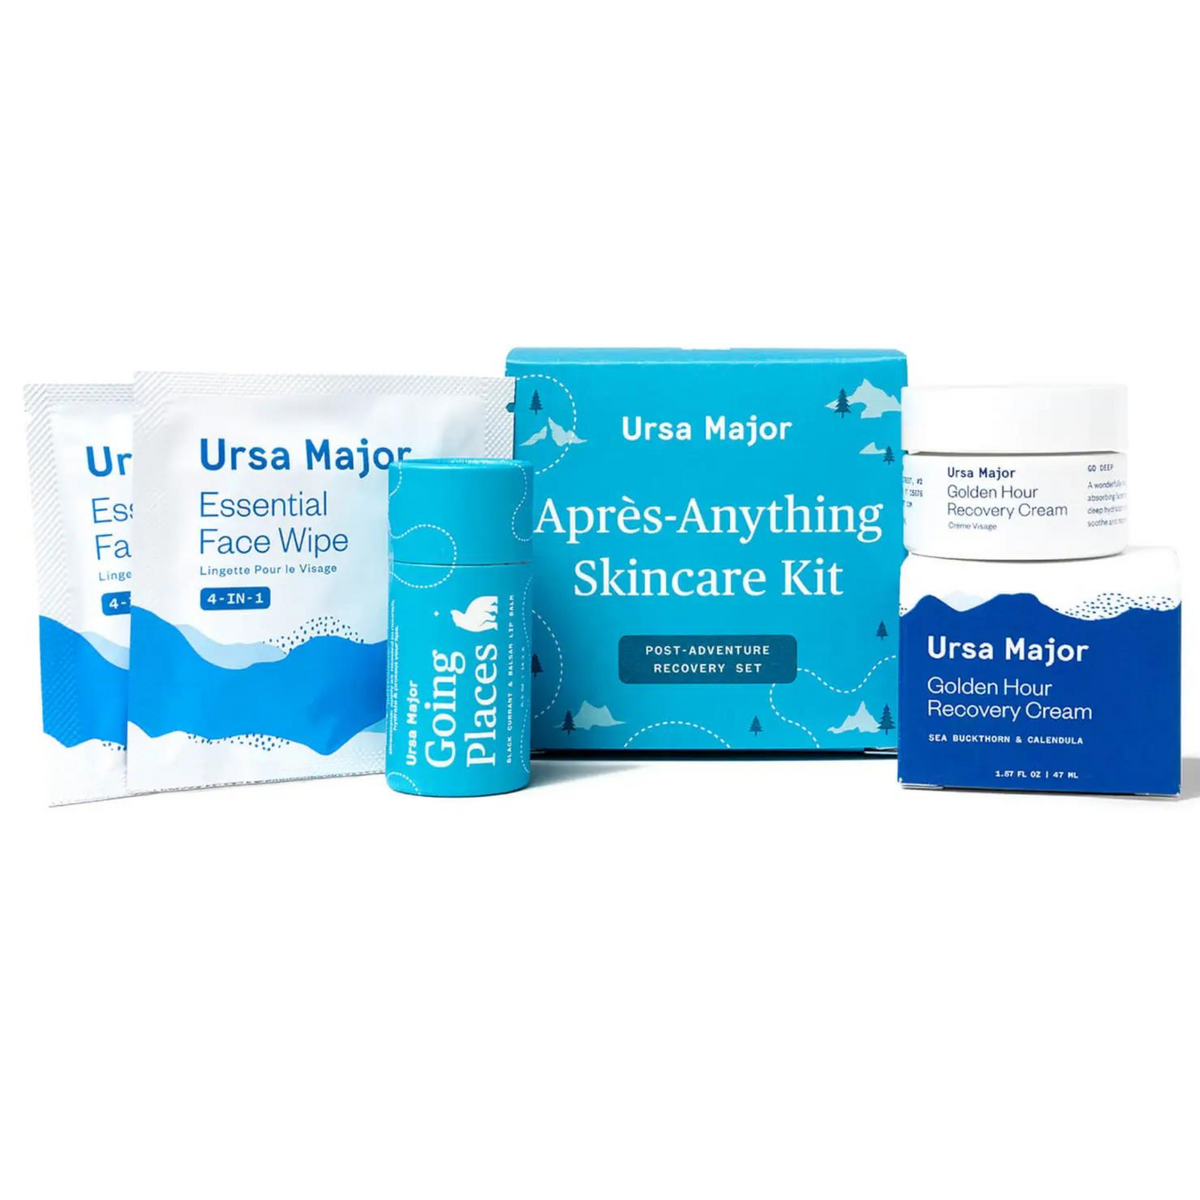 Ursa Major Limited Edition Apres Anything Skincare Kit #10085763